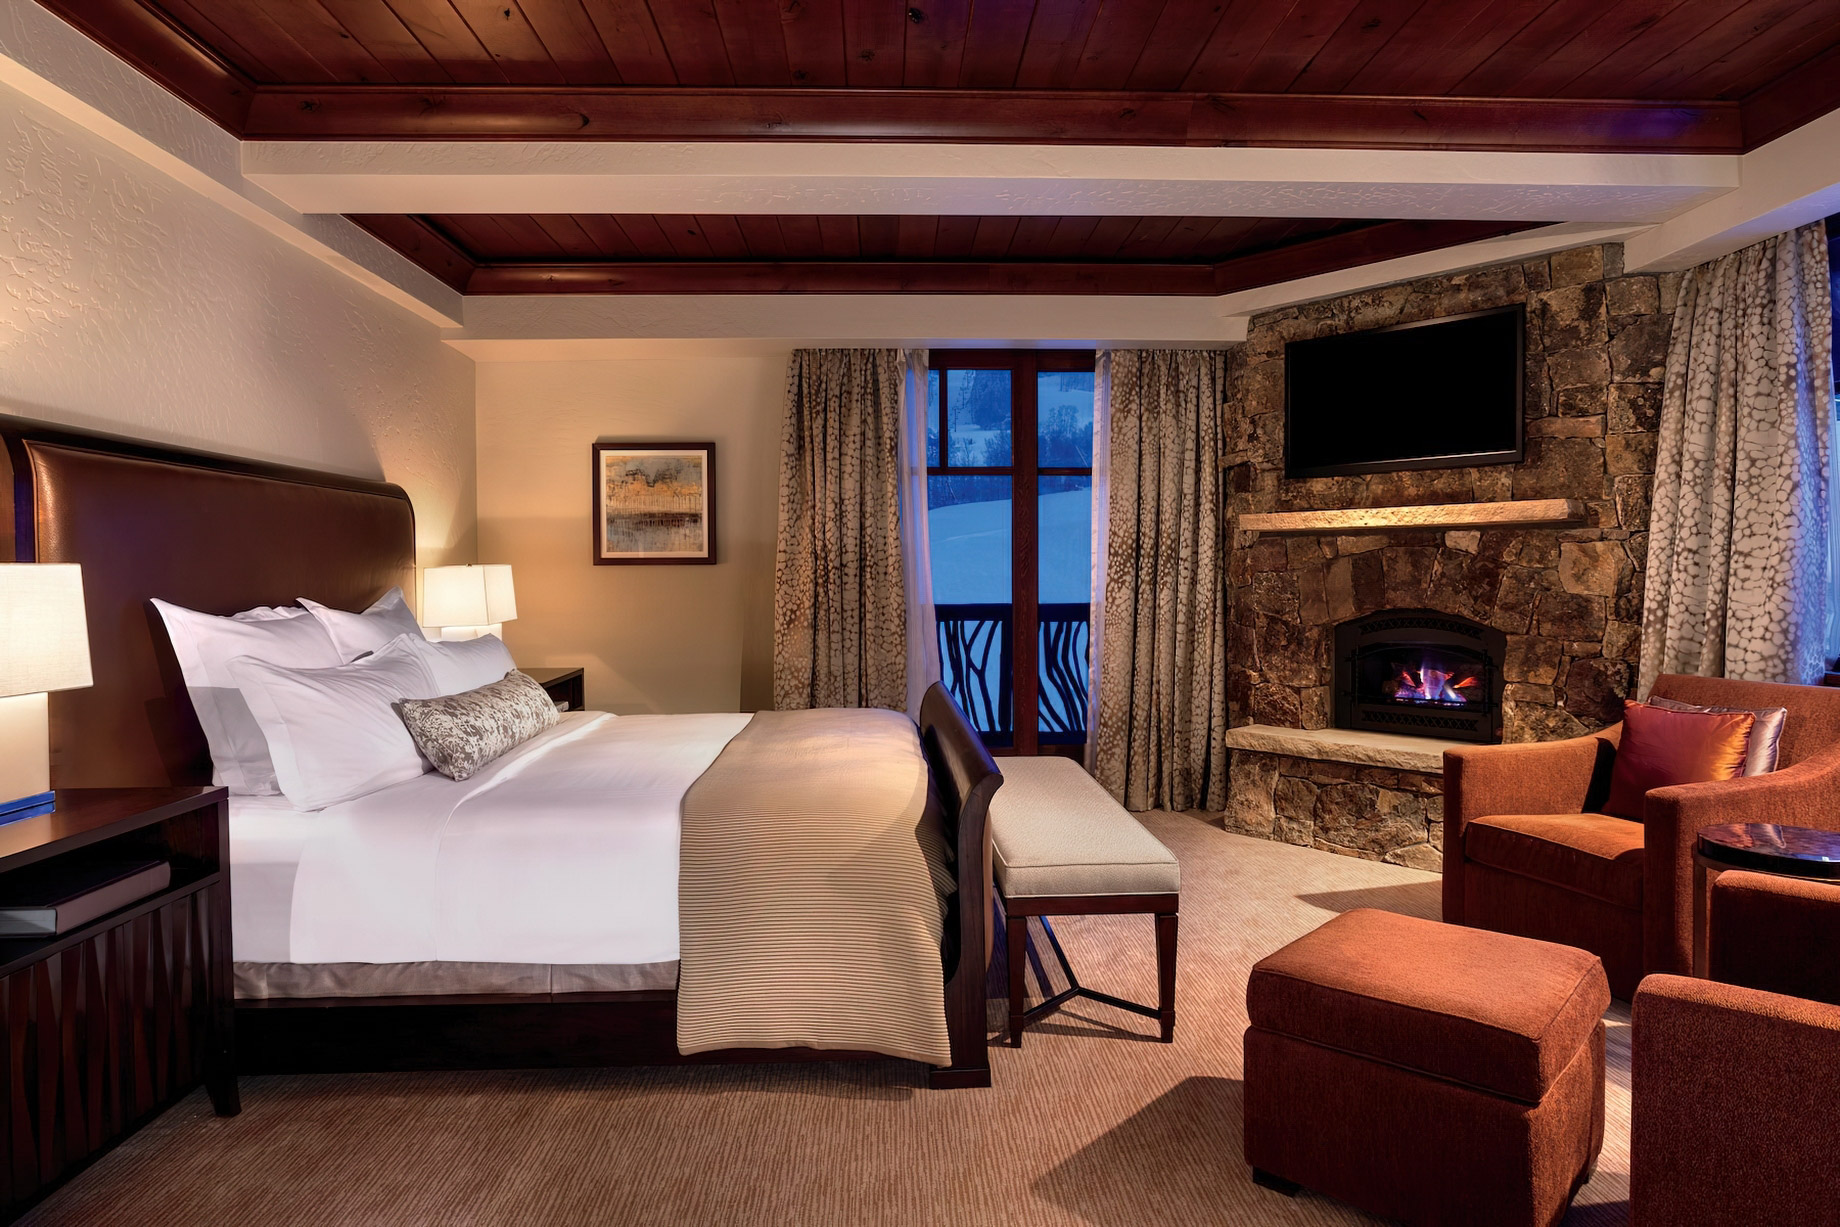 The Ritz-Carlton, Bachelor Gulch Resort - Avon, CO, USA - Guest Bedroom